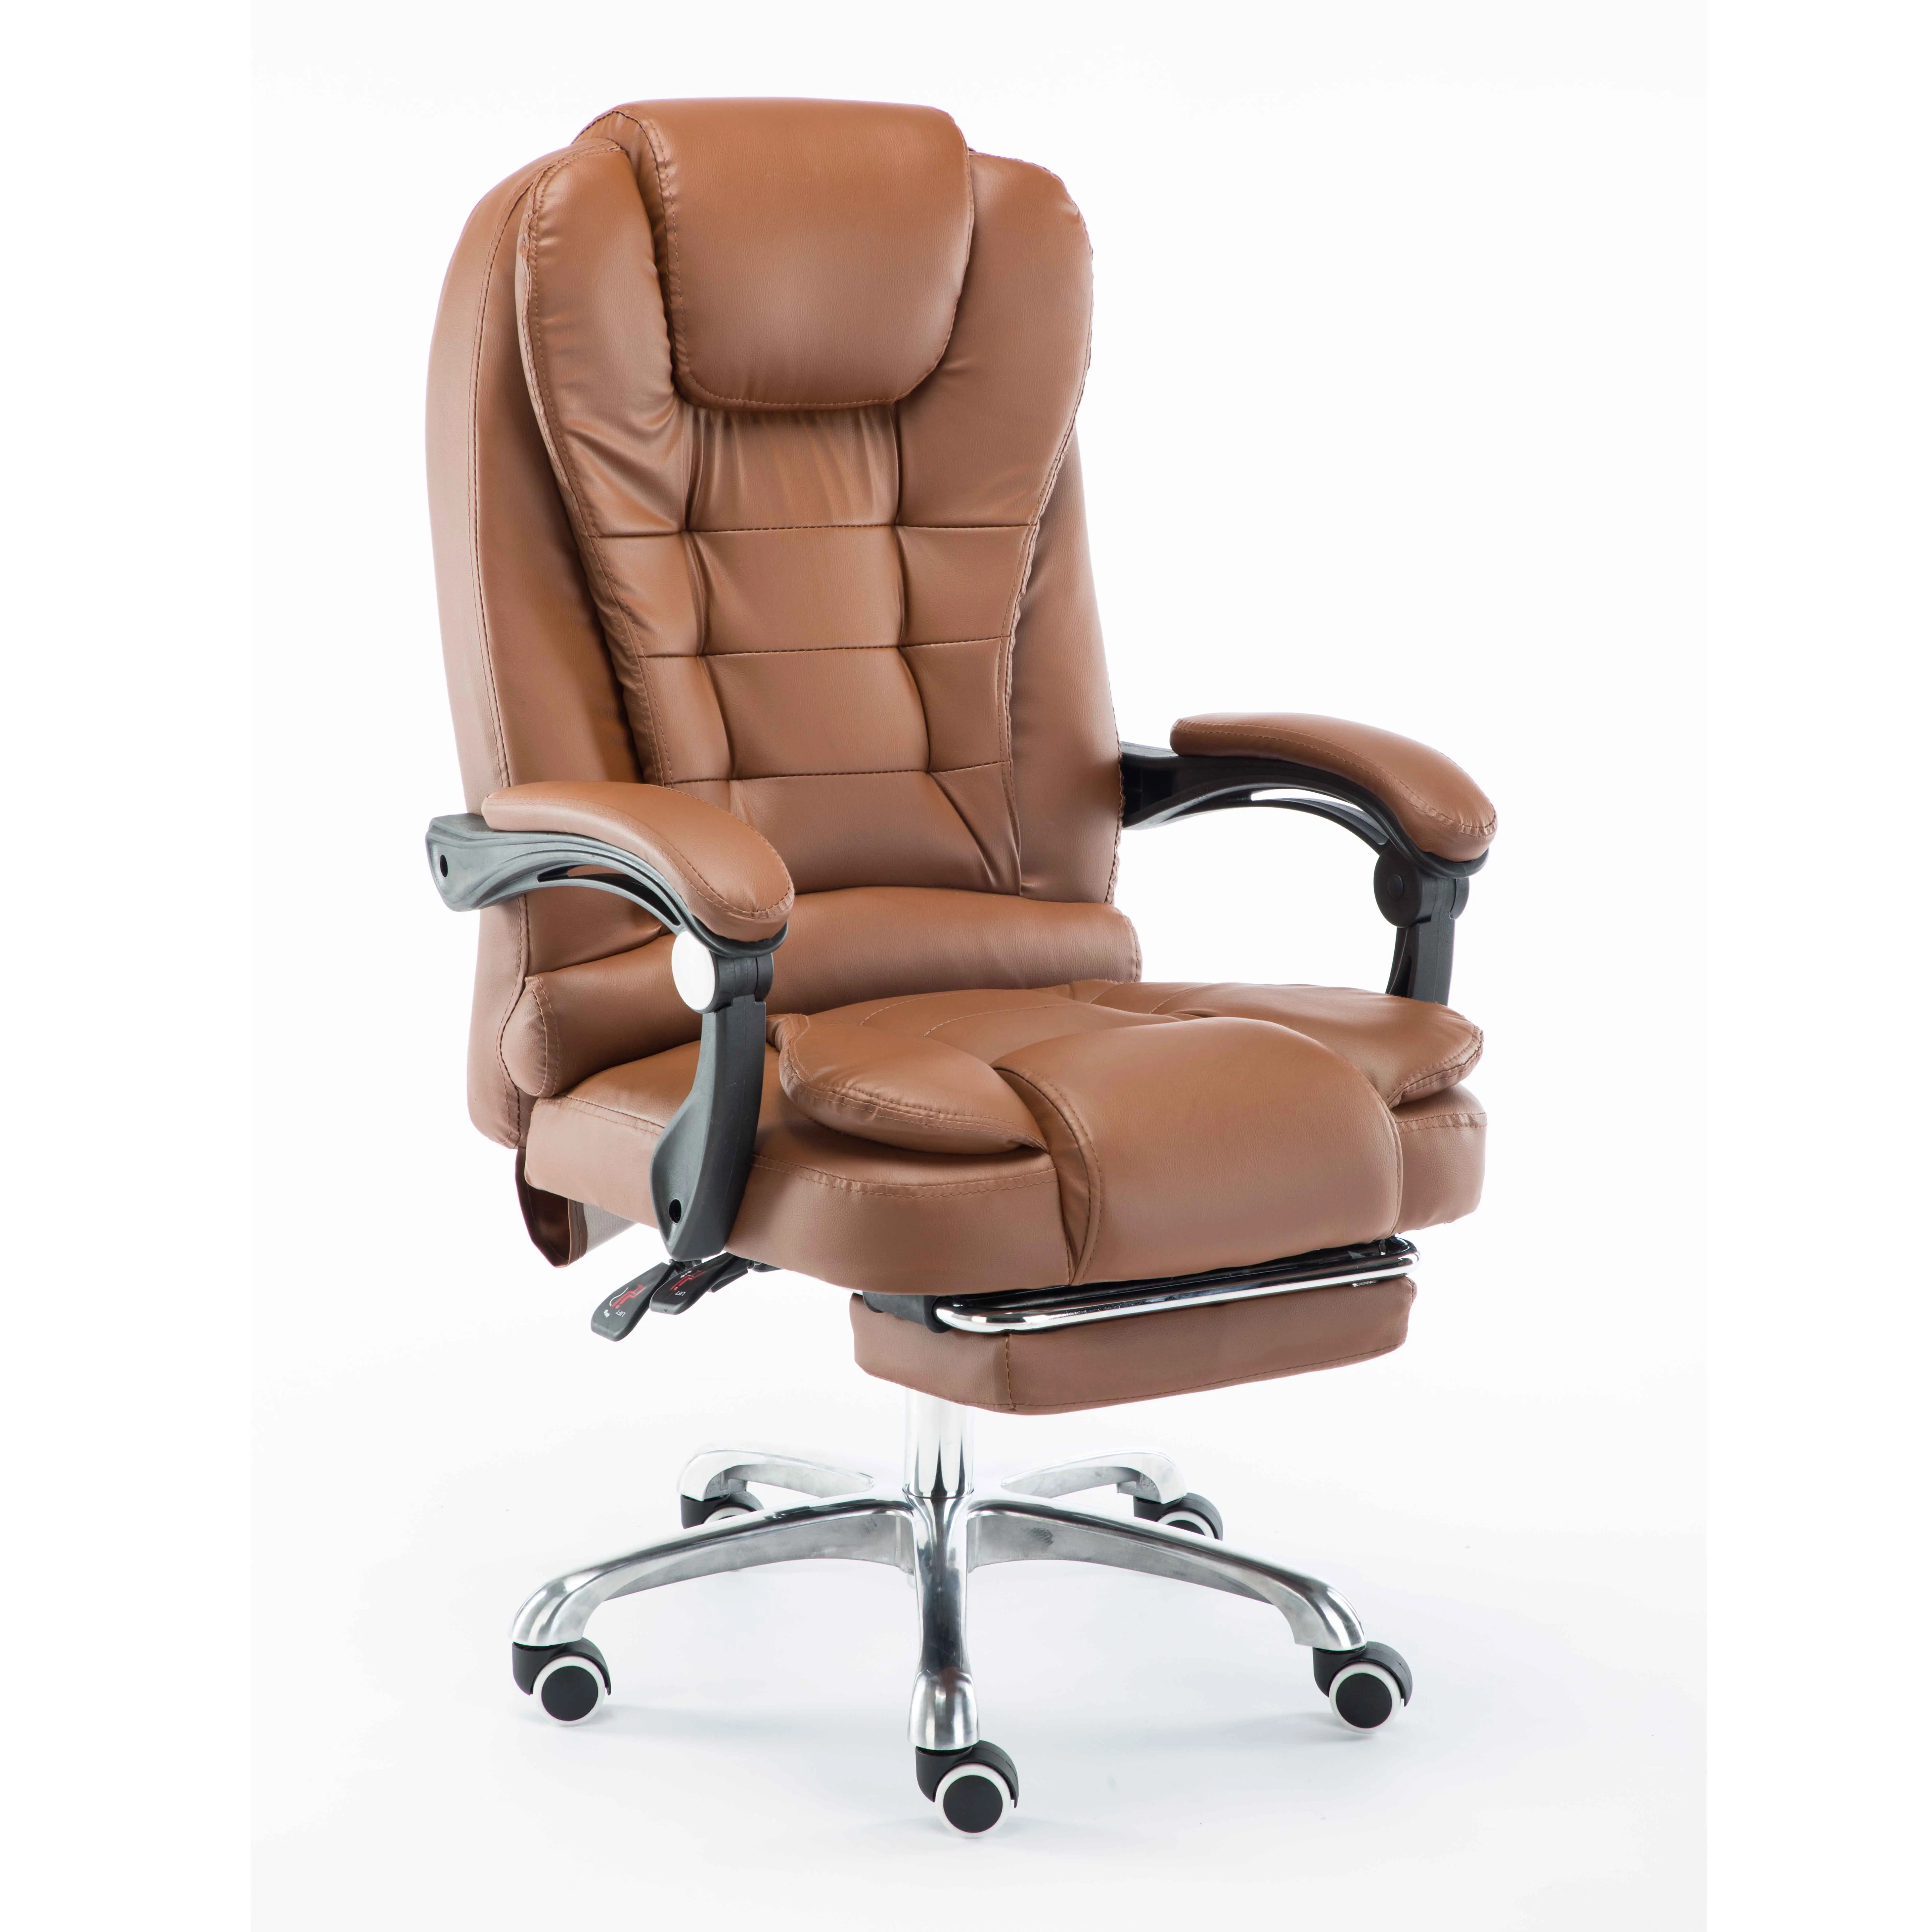 Executive Ergonomic Office Mesh Chair with Headrest B15 Best Modern office chair